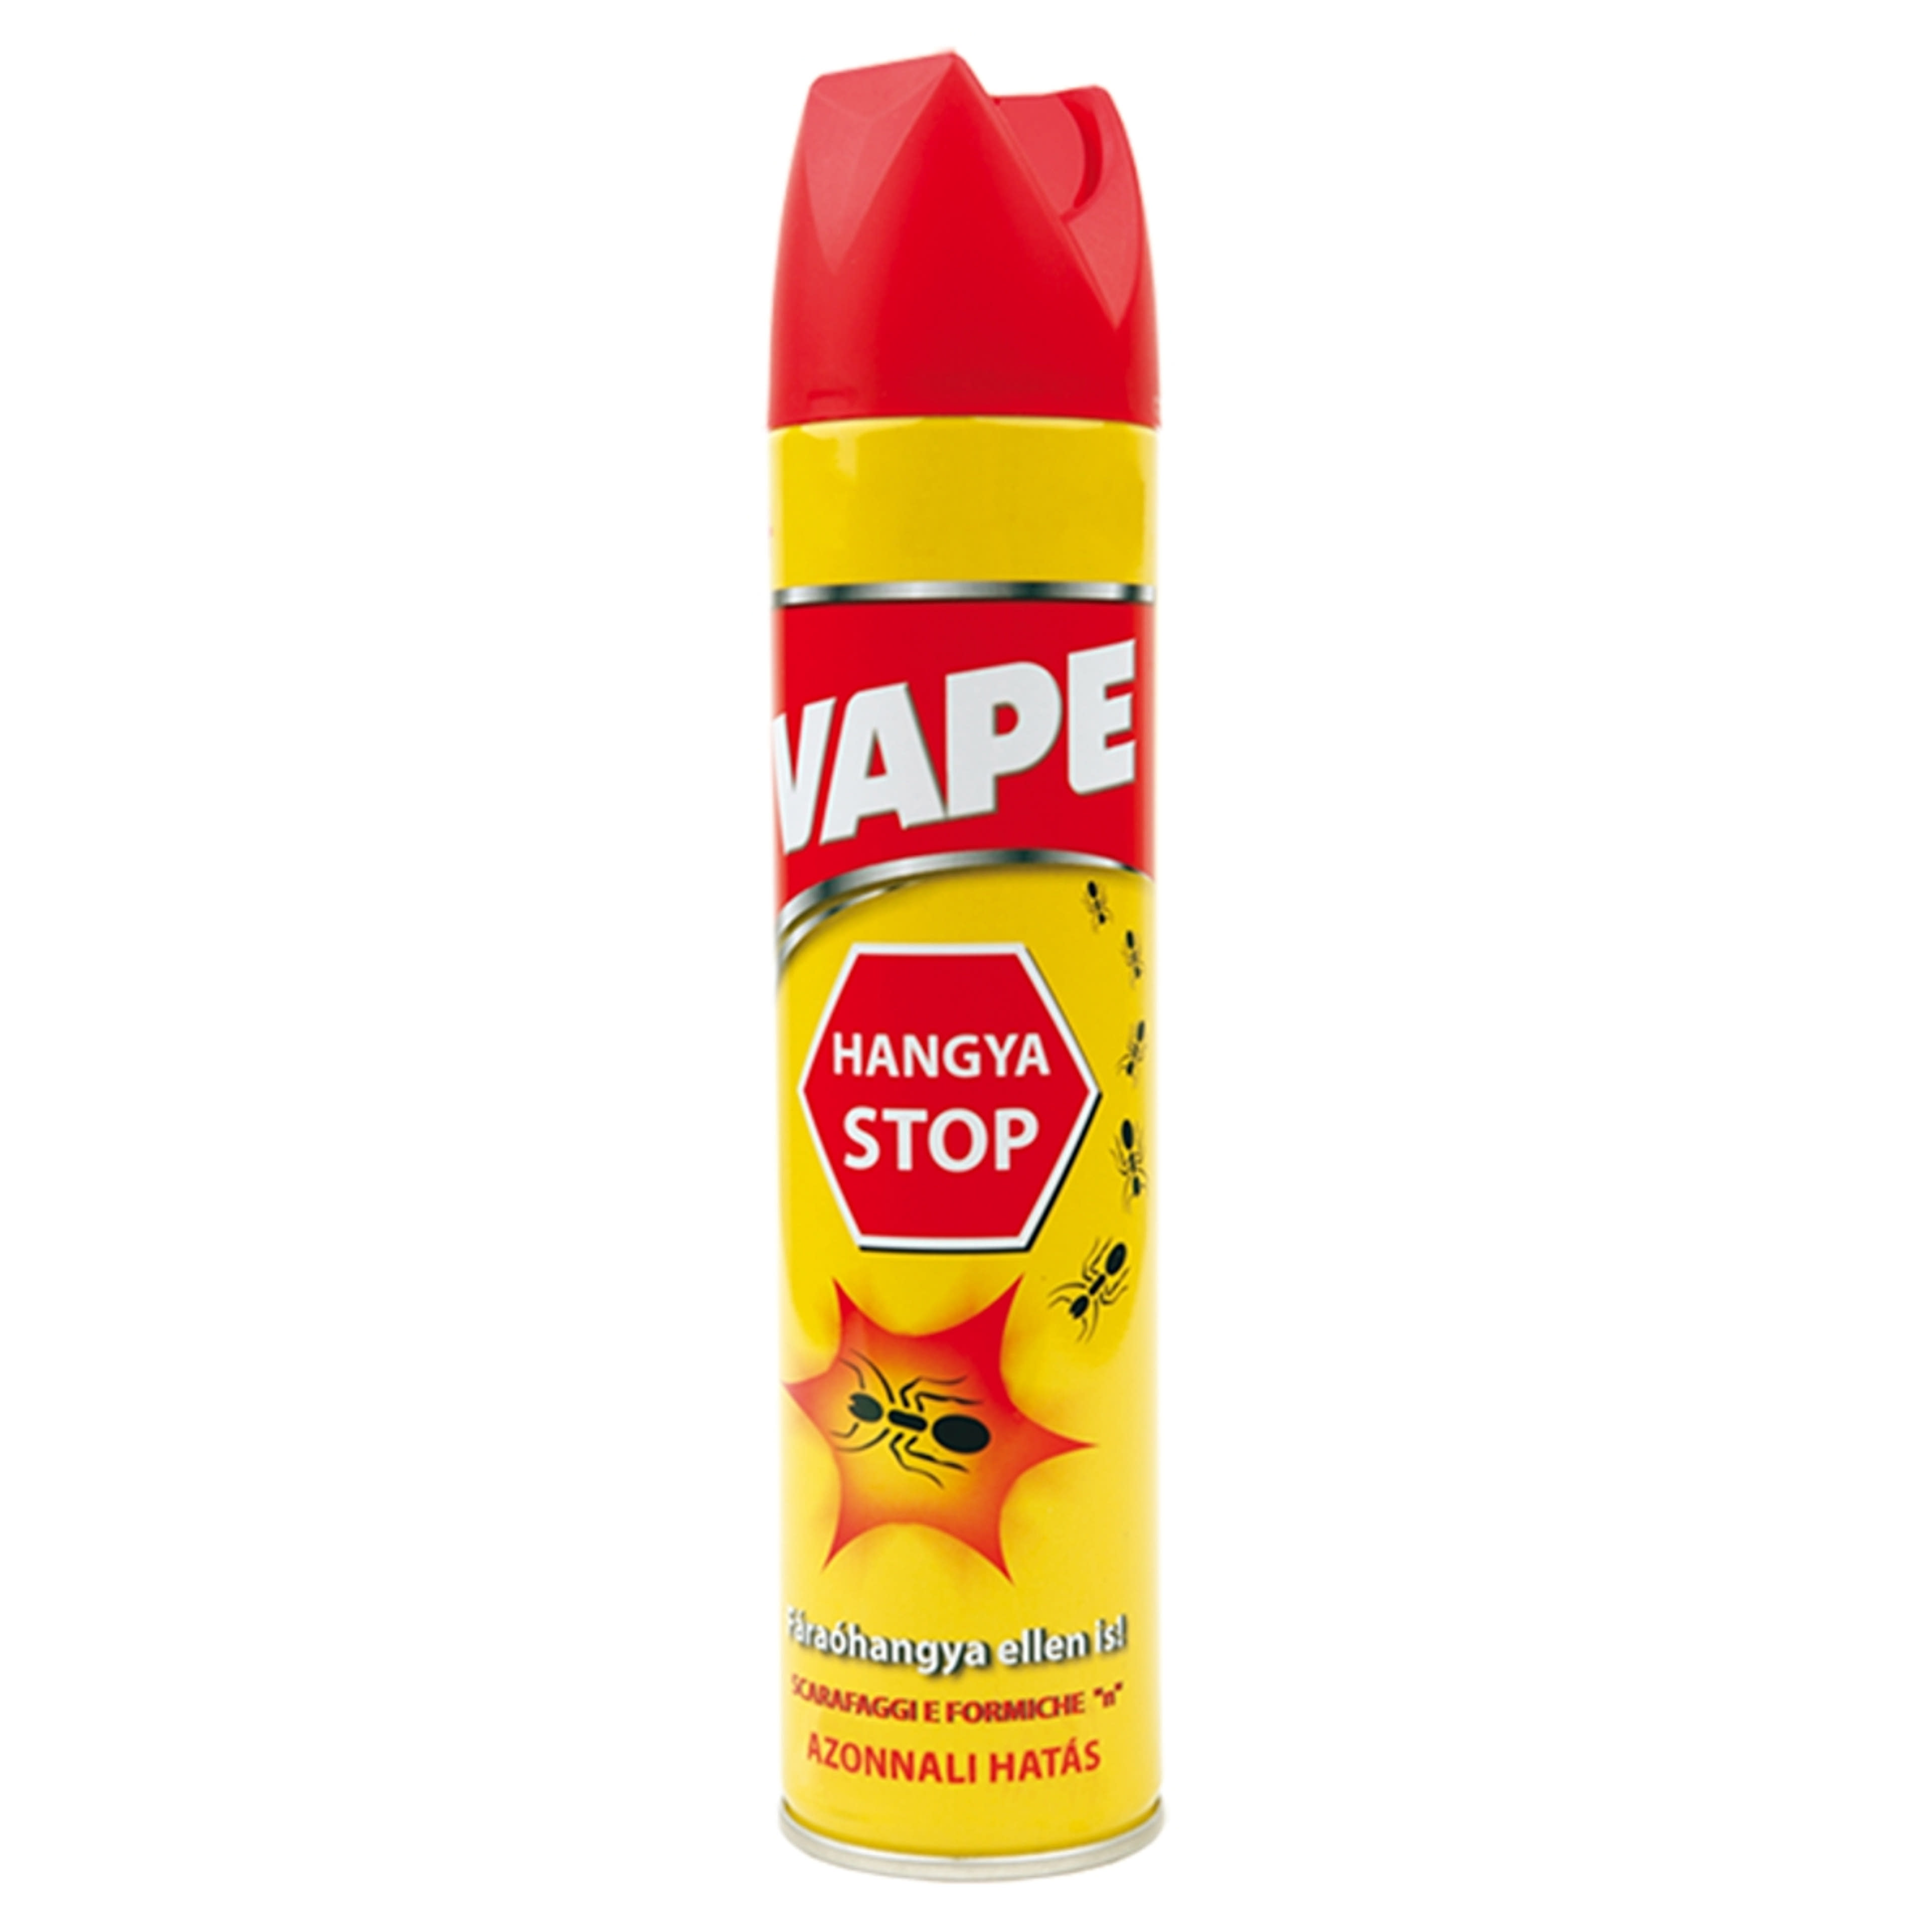 Vape Hangya Stop Spray - 300 ml-1